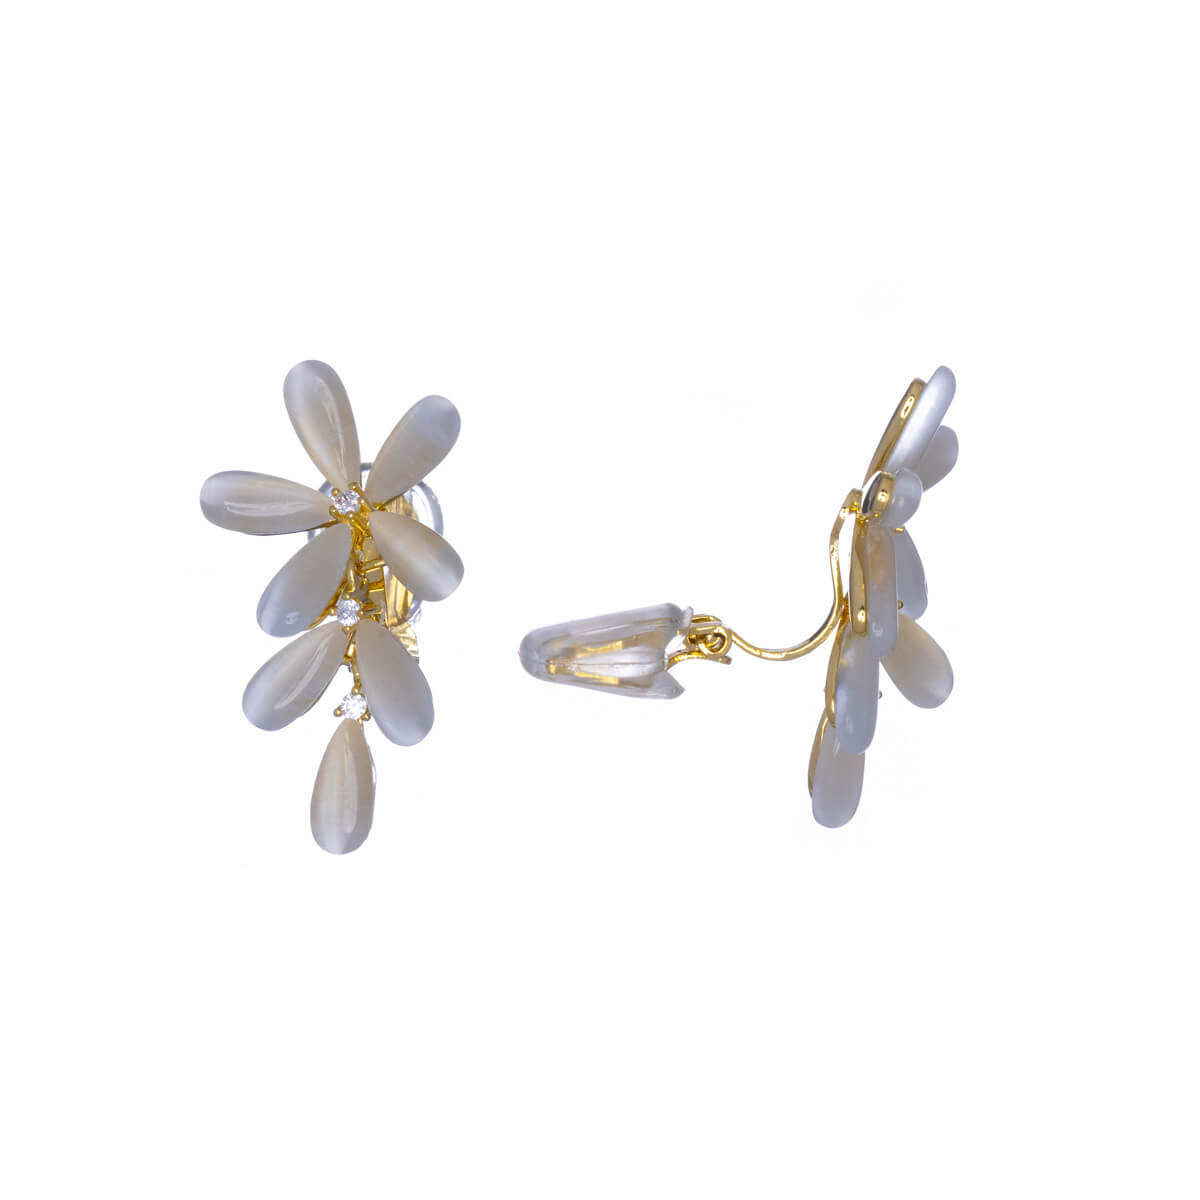 Flower clip earrings with zirconia stones